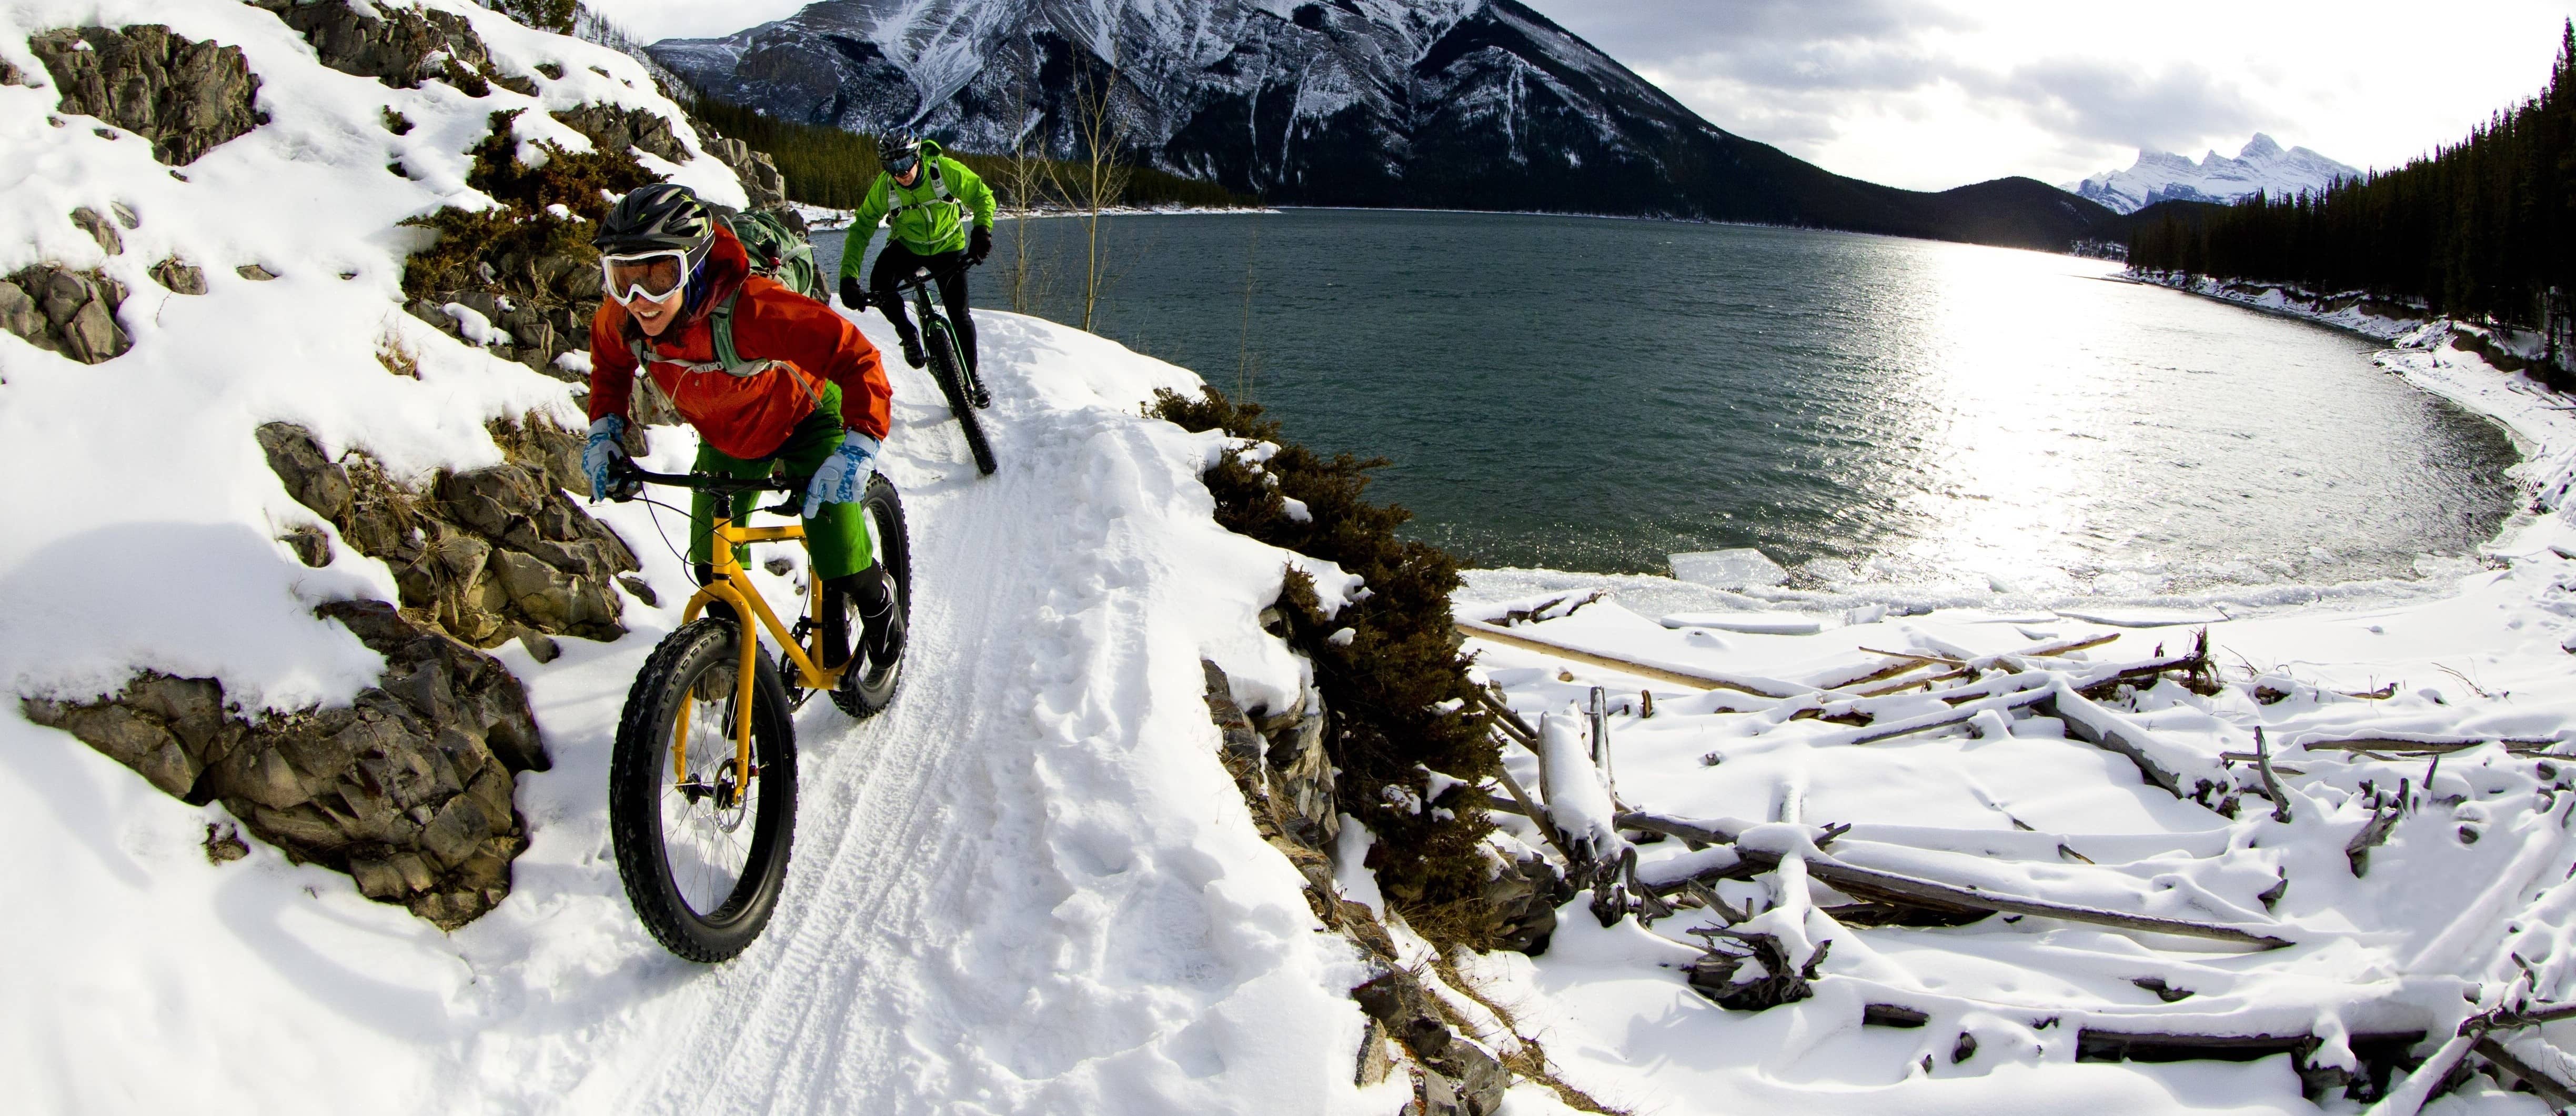 Winter bike ride through the mountains.